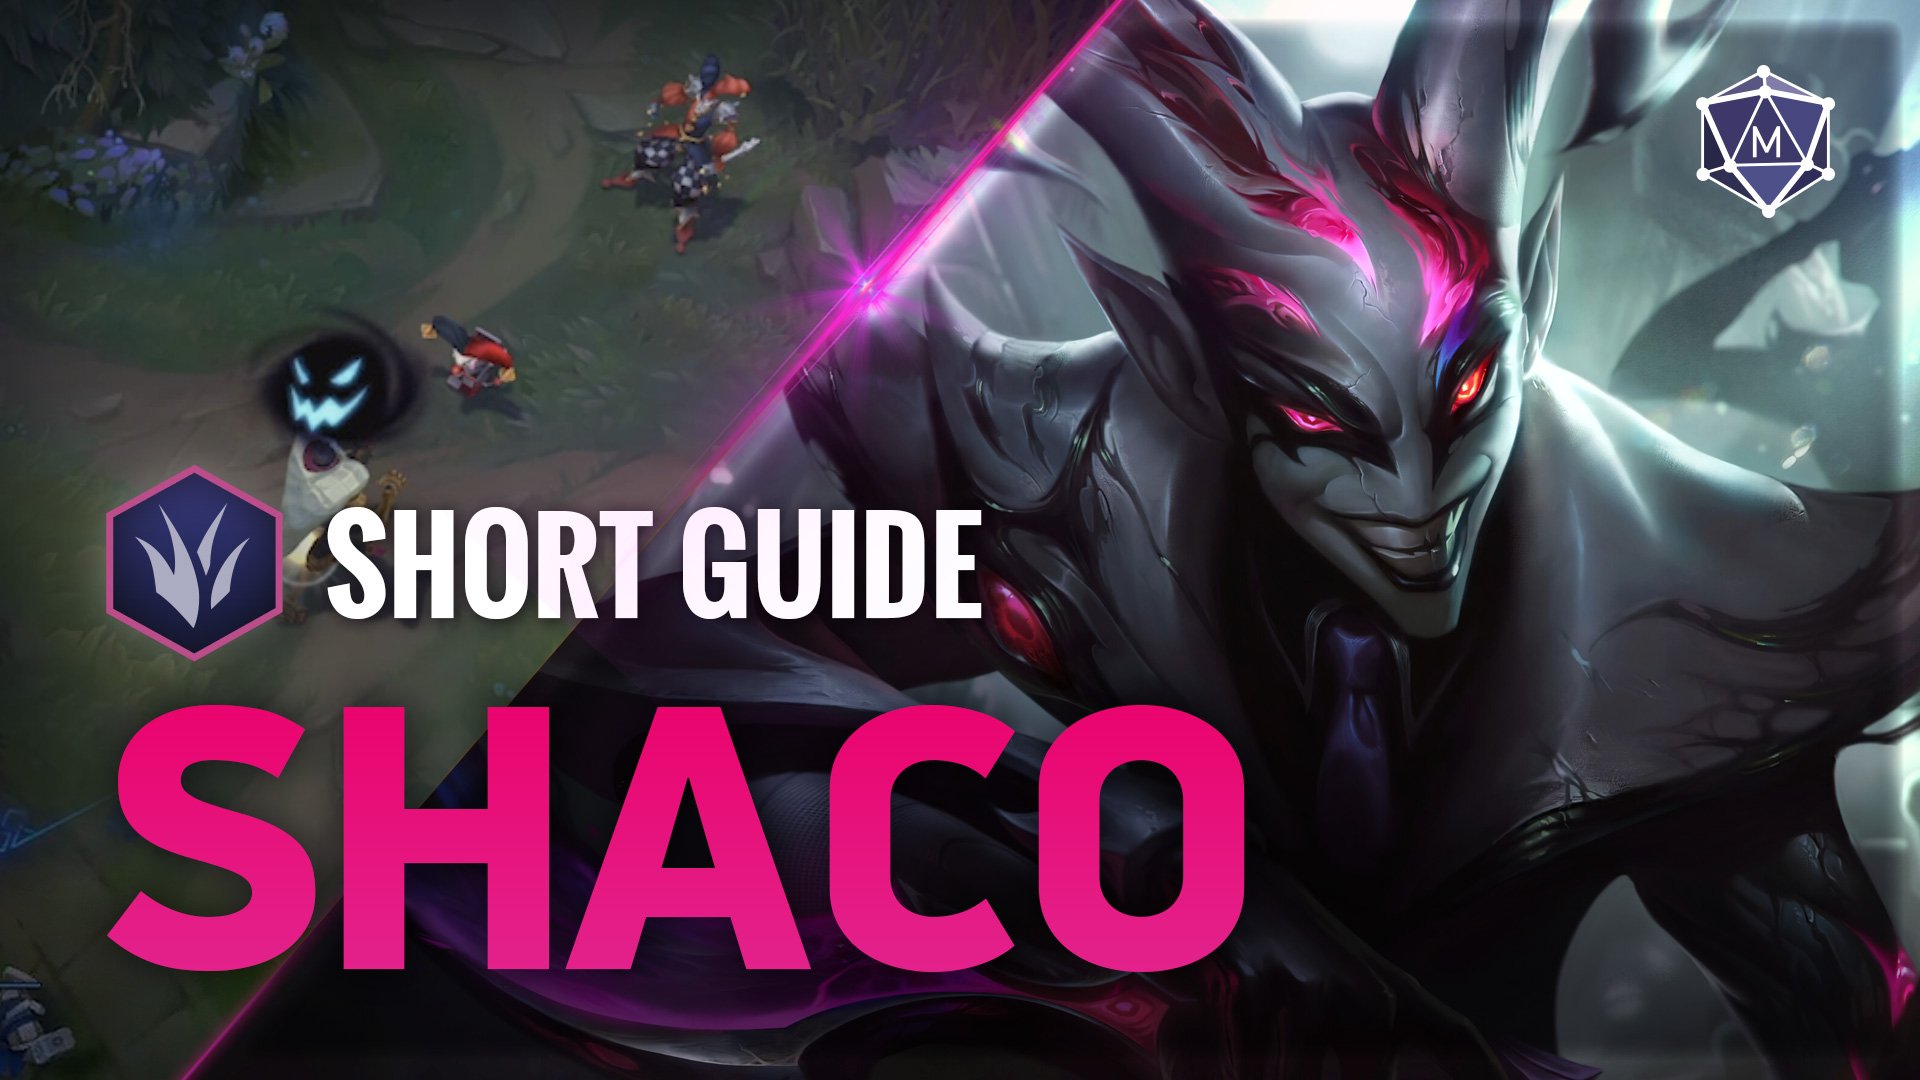 Shaco expert guide